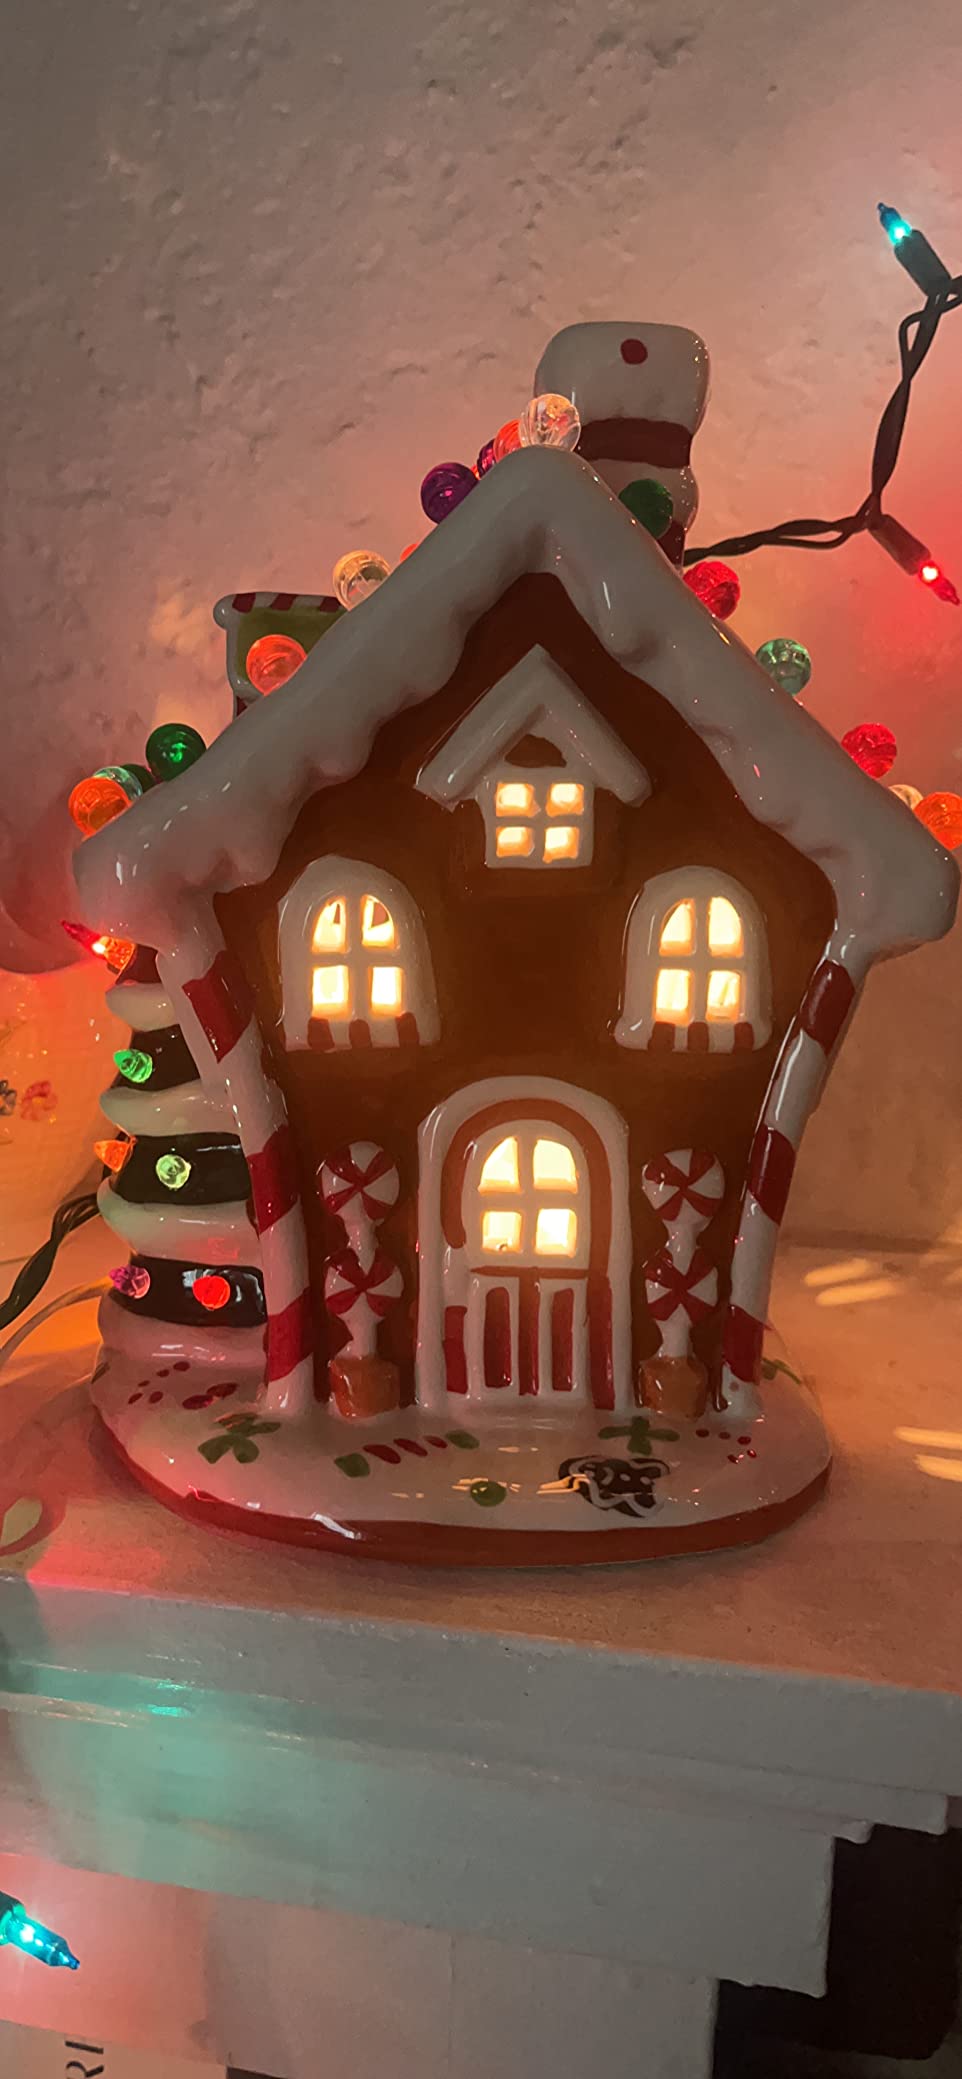 Super cute Gingerbread House!